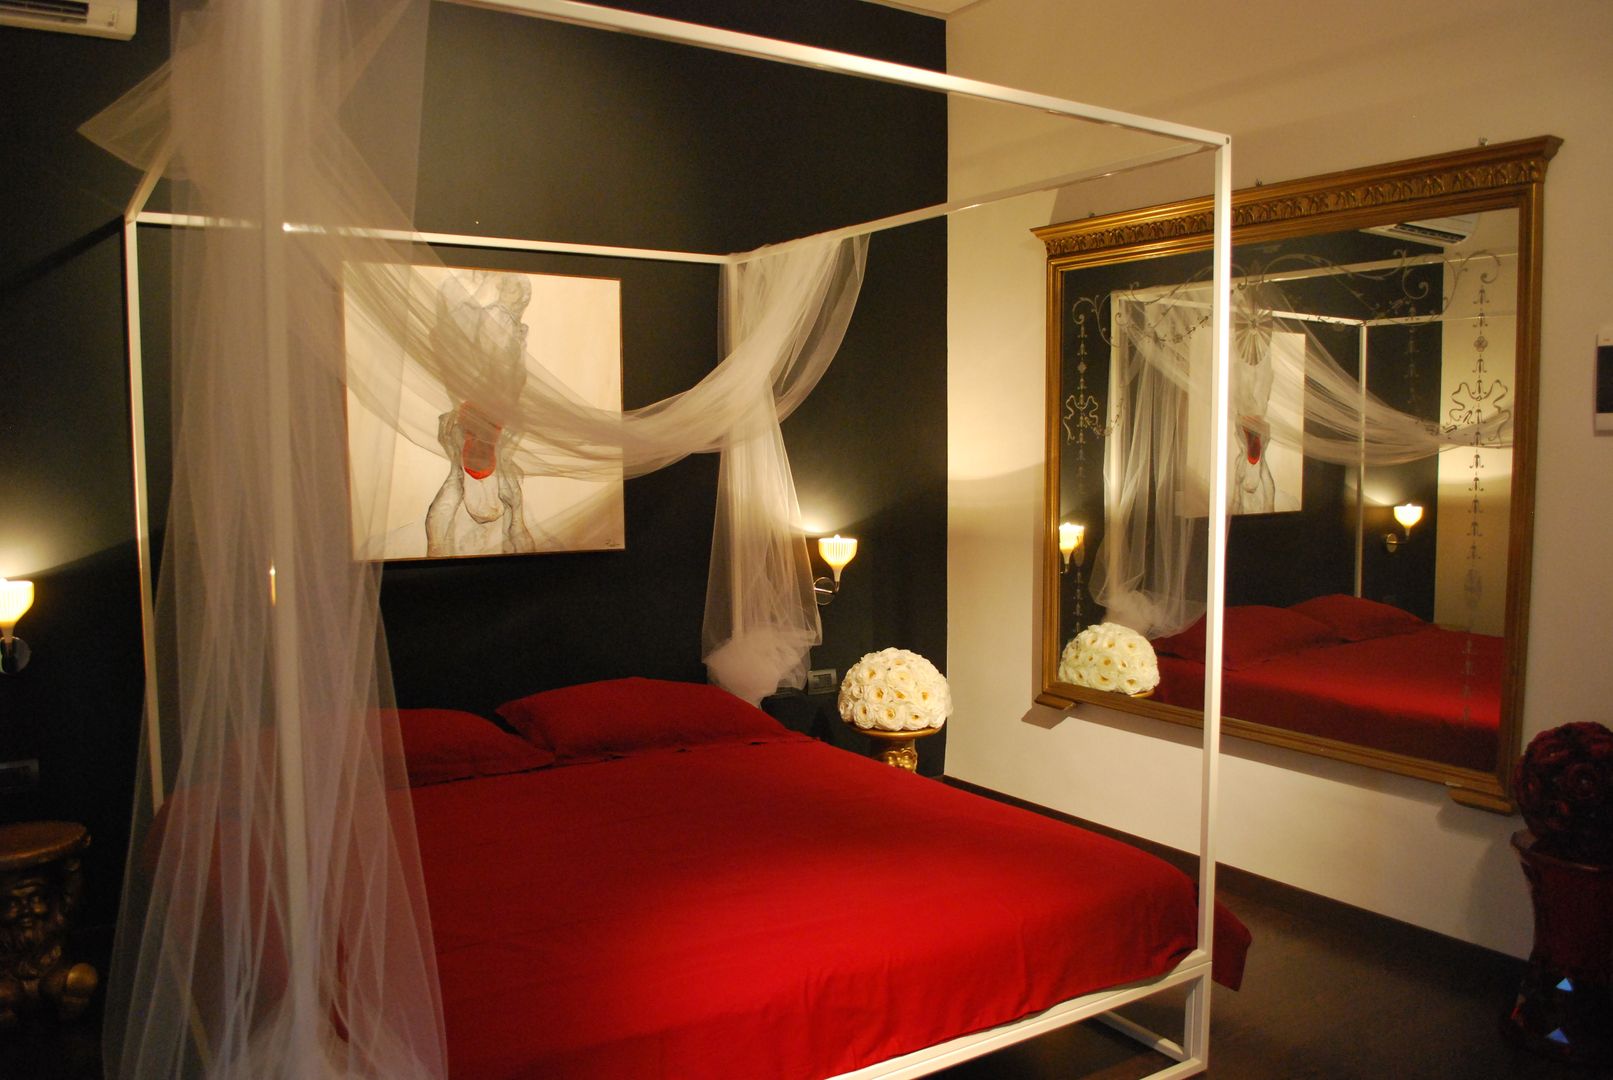 B&B Luxury Accomodation, Rizzotti Design Rizzotti Design Modern style bedroom